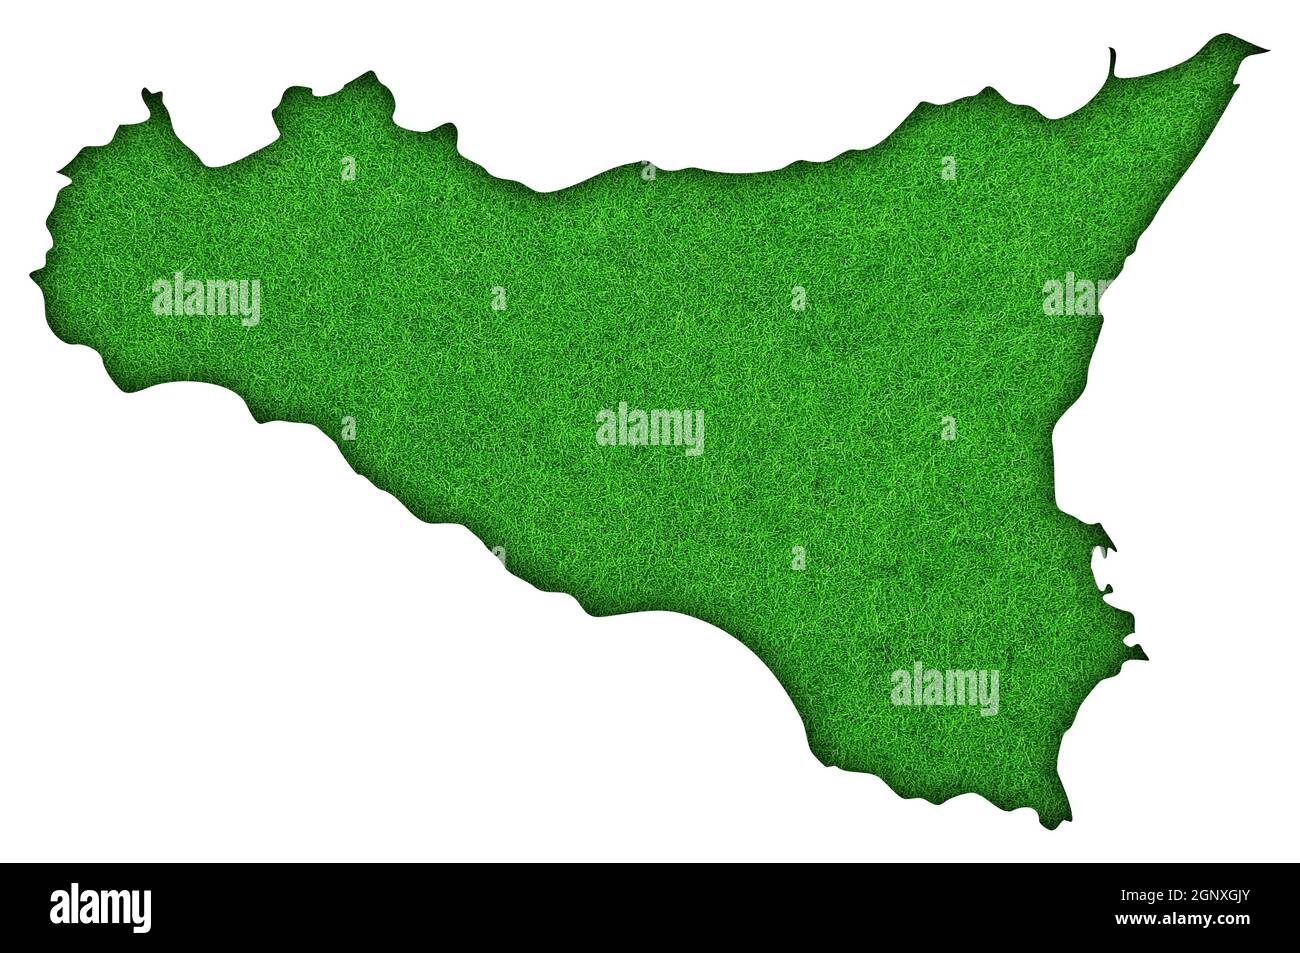 Map of Sicily on green felt Stock Photo